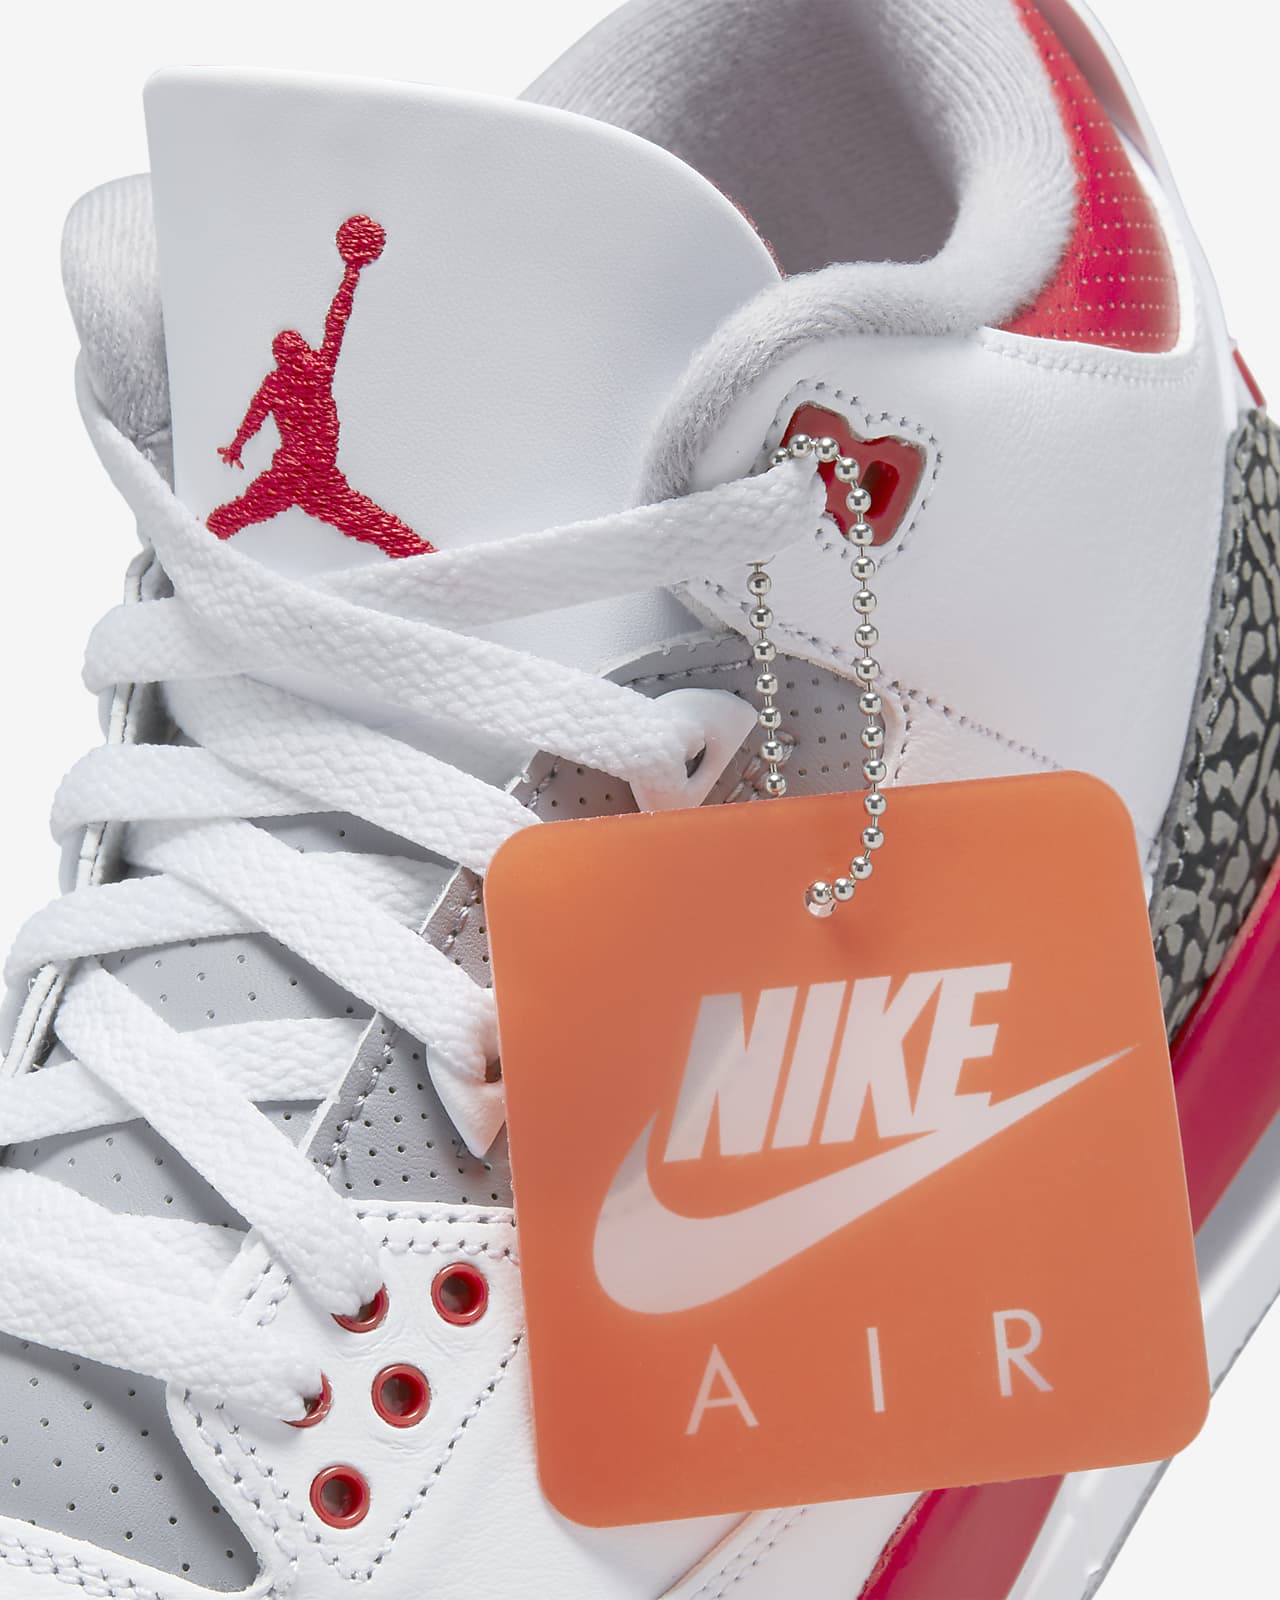 Broma sobresalir Personalmente Air Jordan 3 Retro Men's Shoes. Nike.com